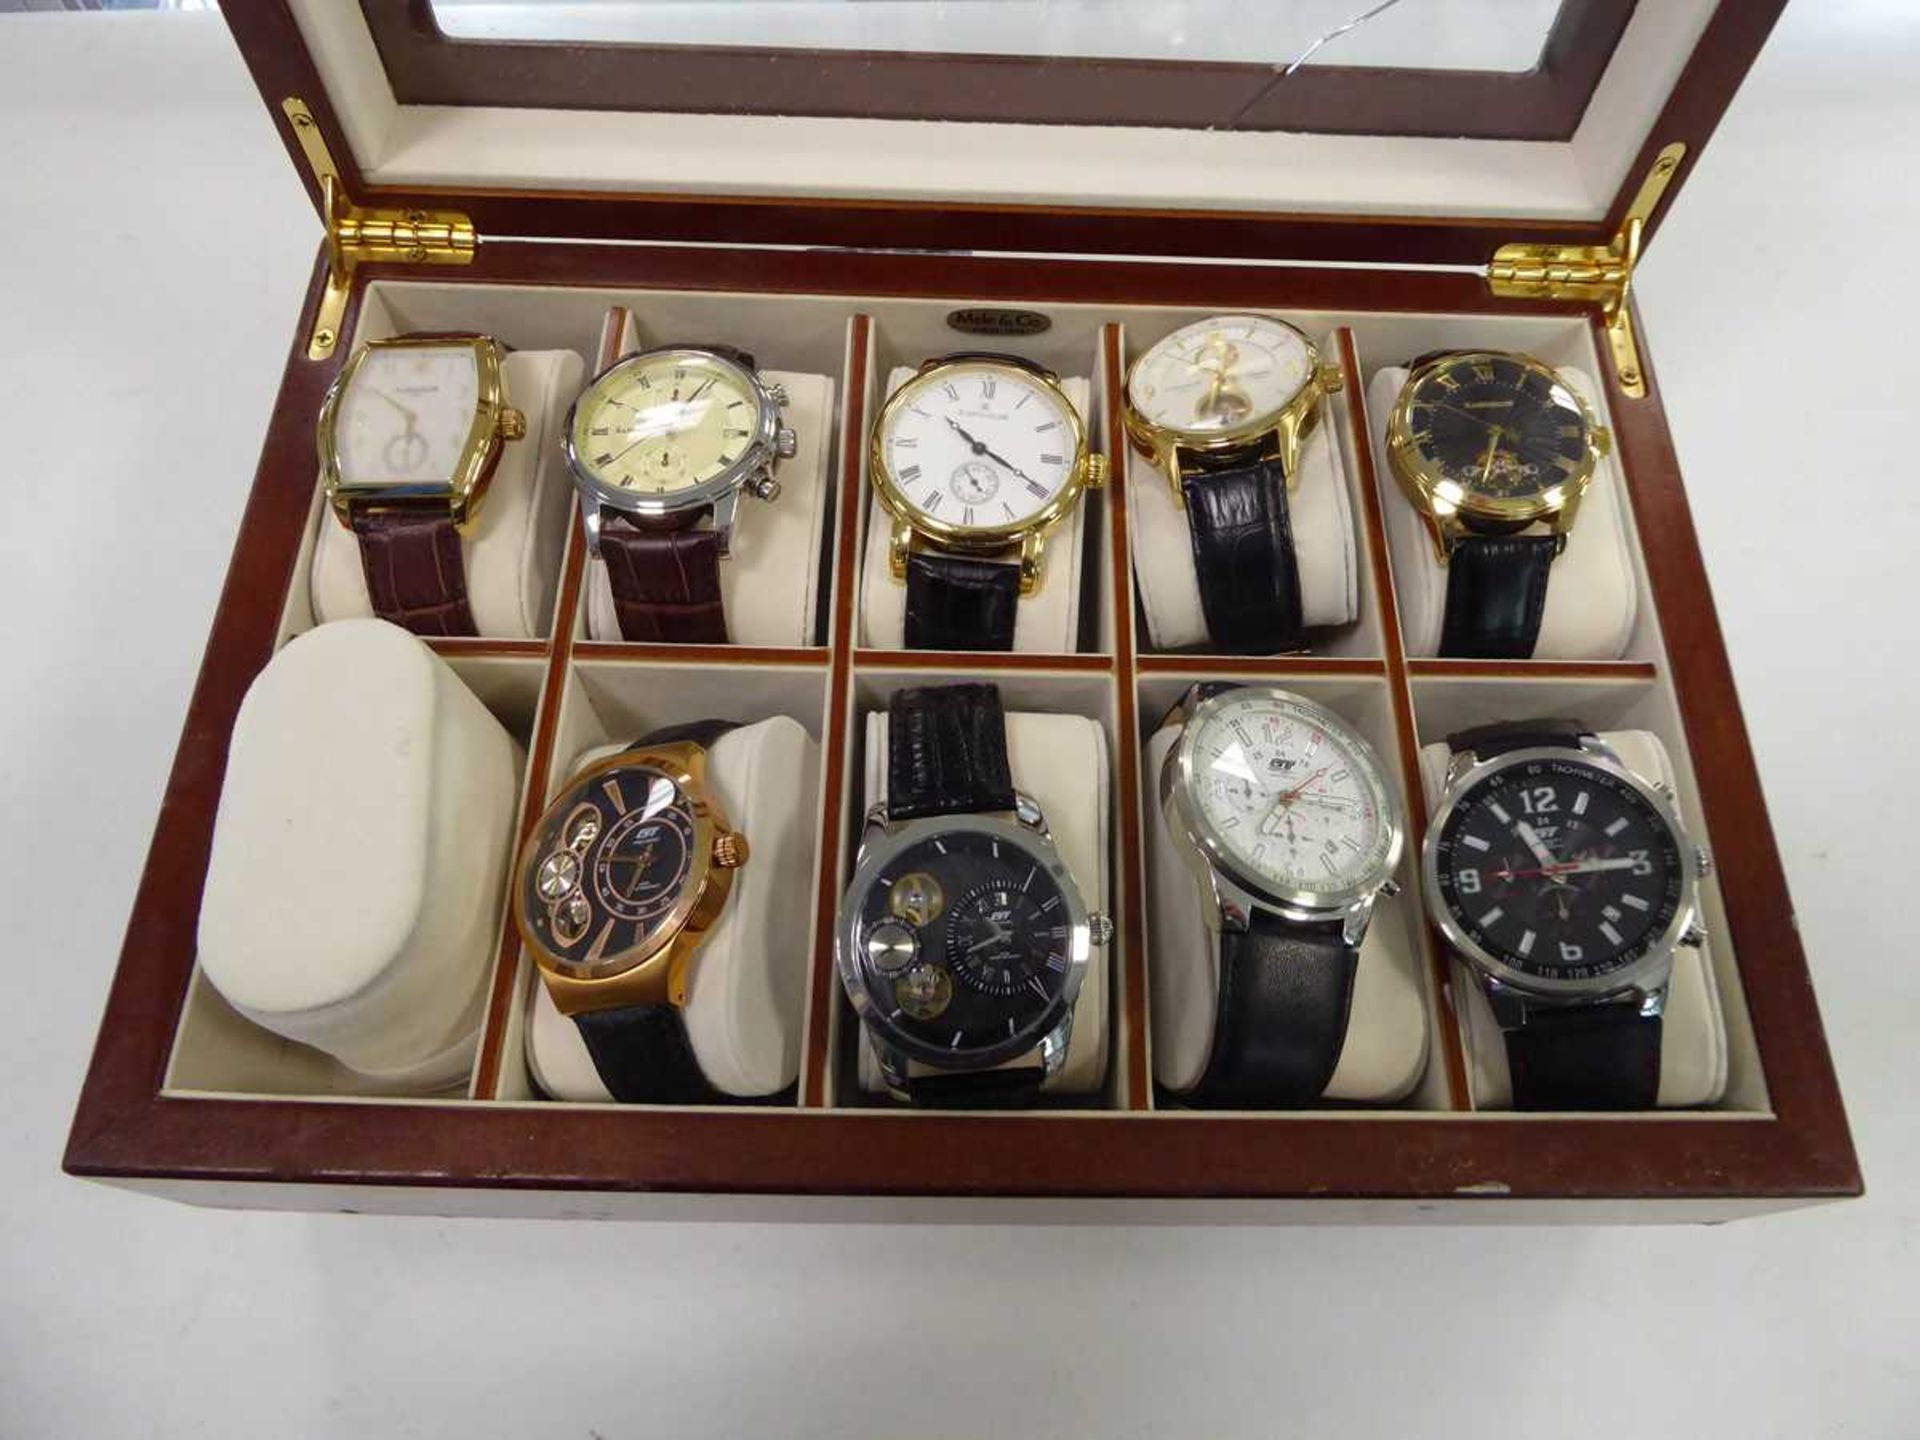 Case containing 9 men's wristwatches